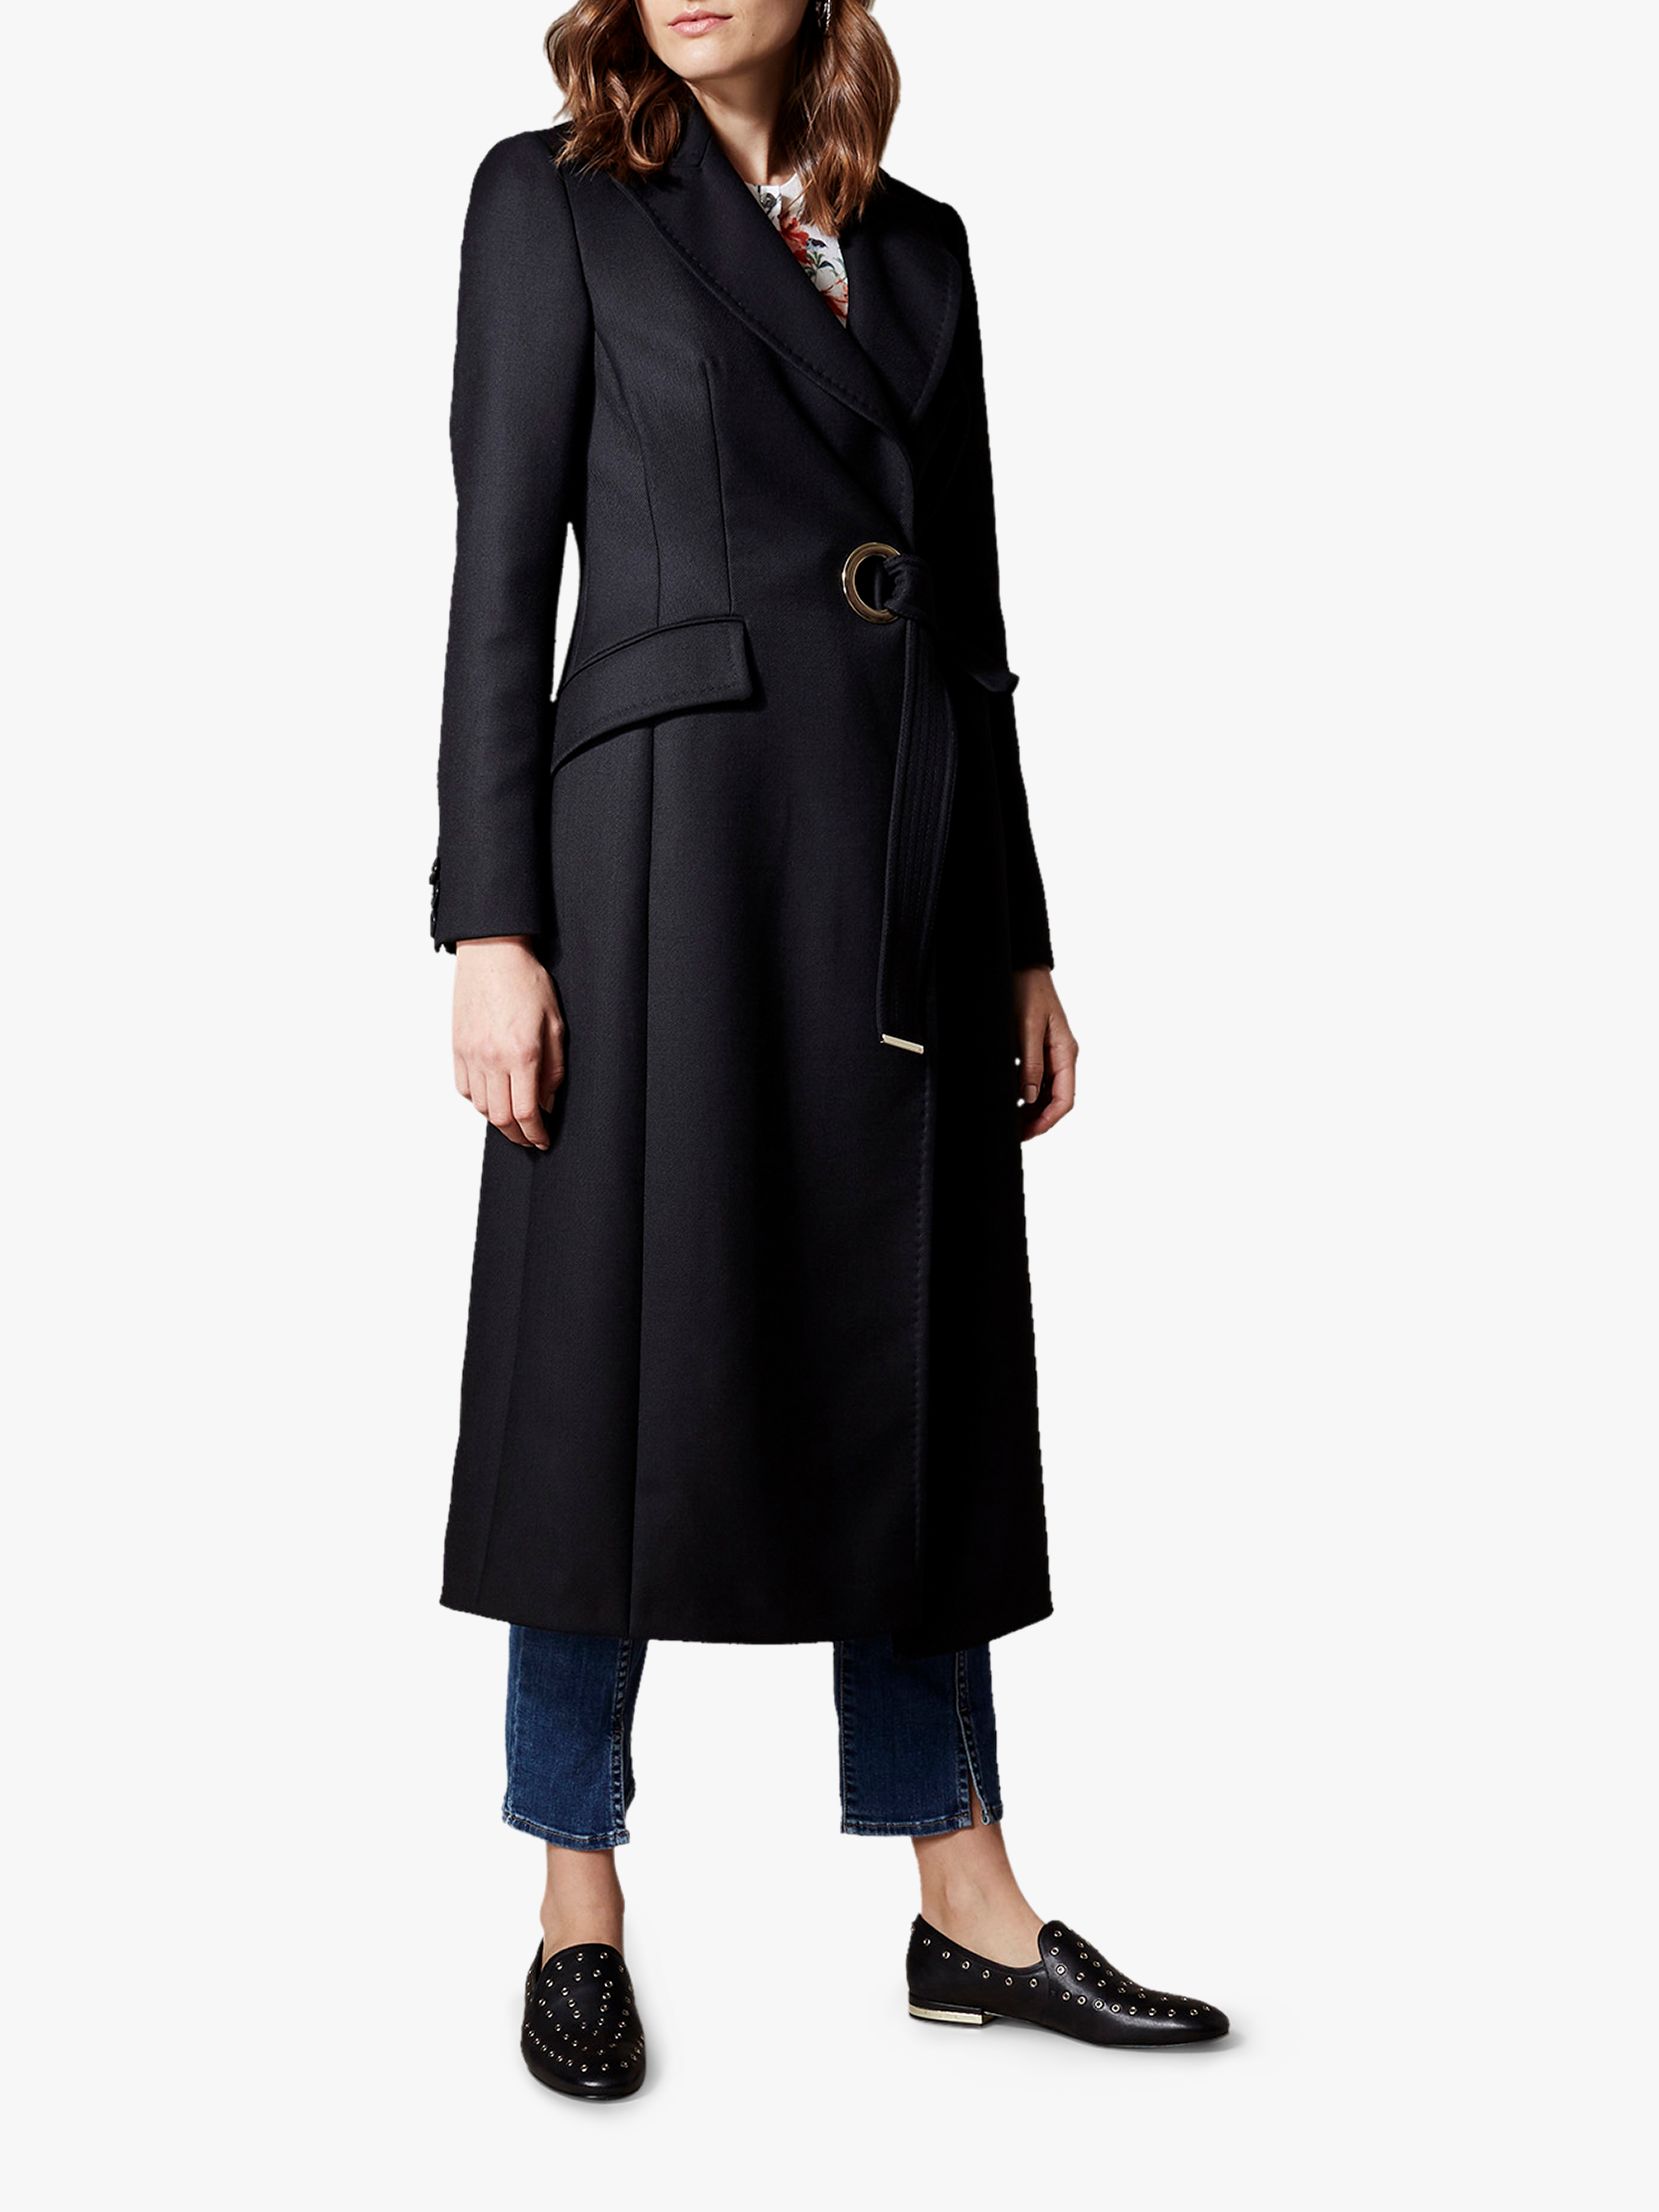 Karen Millen Tailored Wrap Coat, Black at John Lewis & Partners